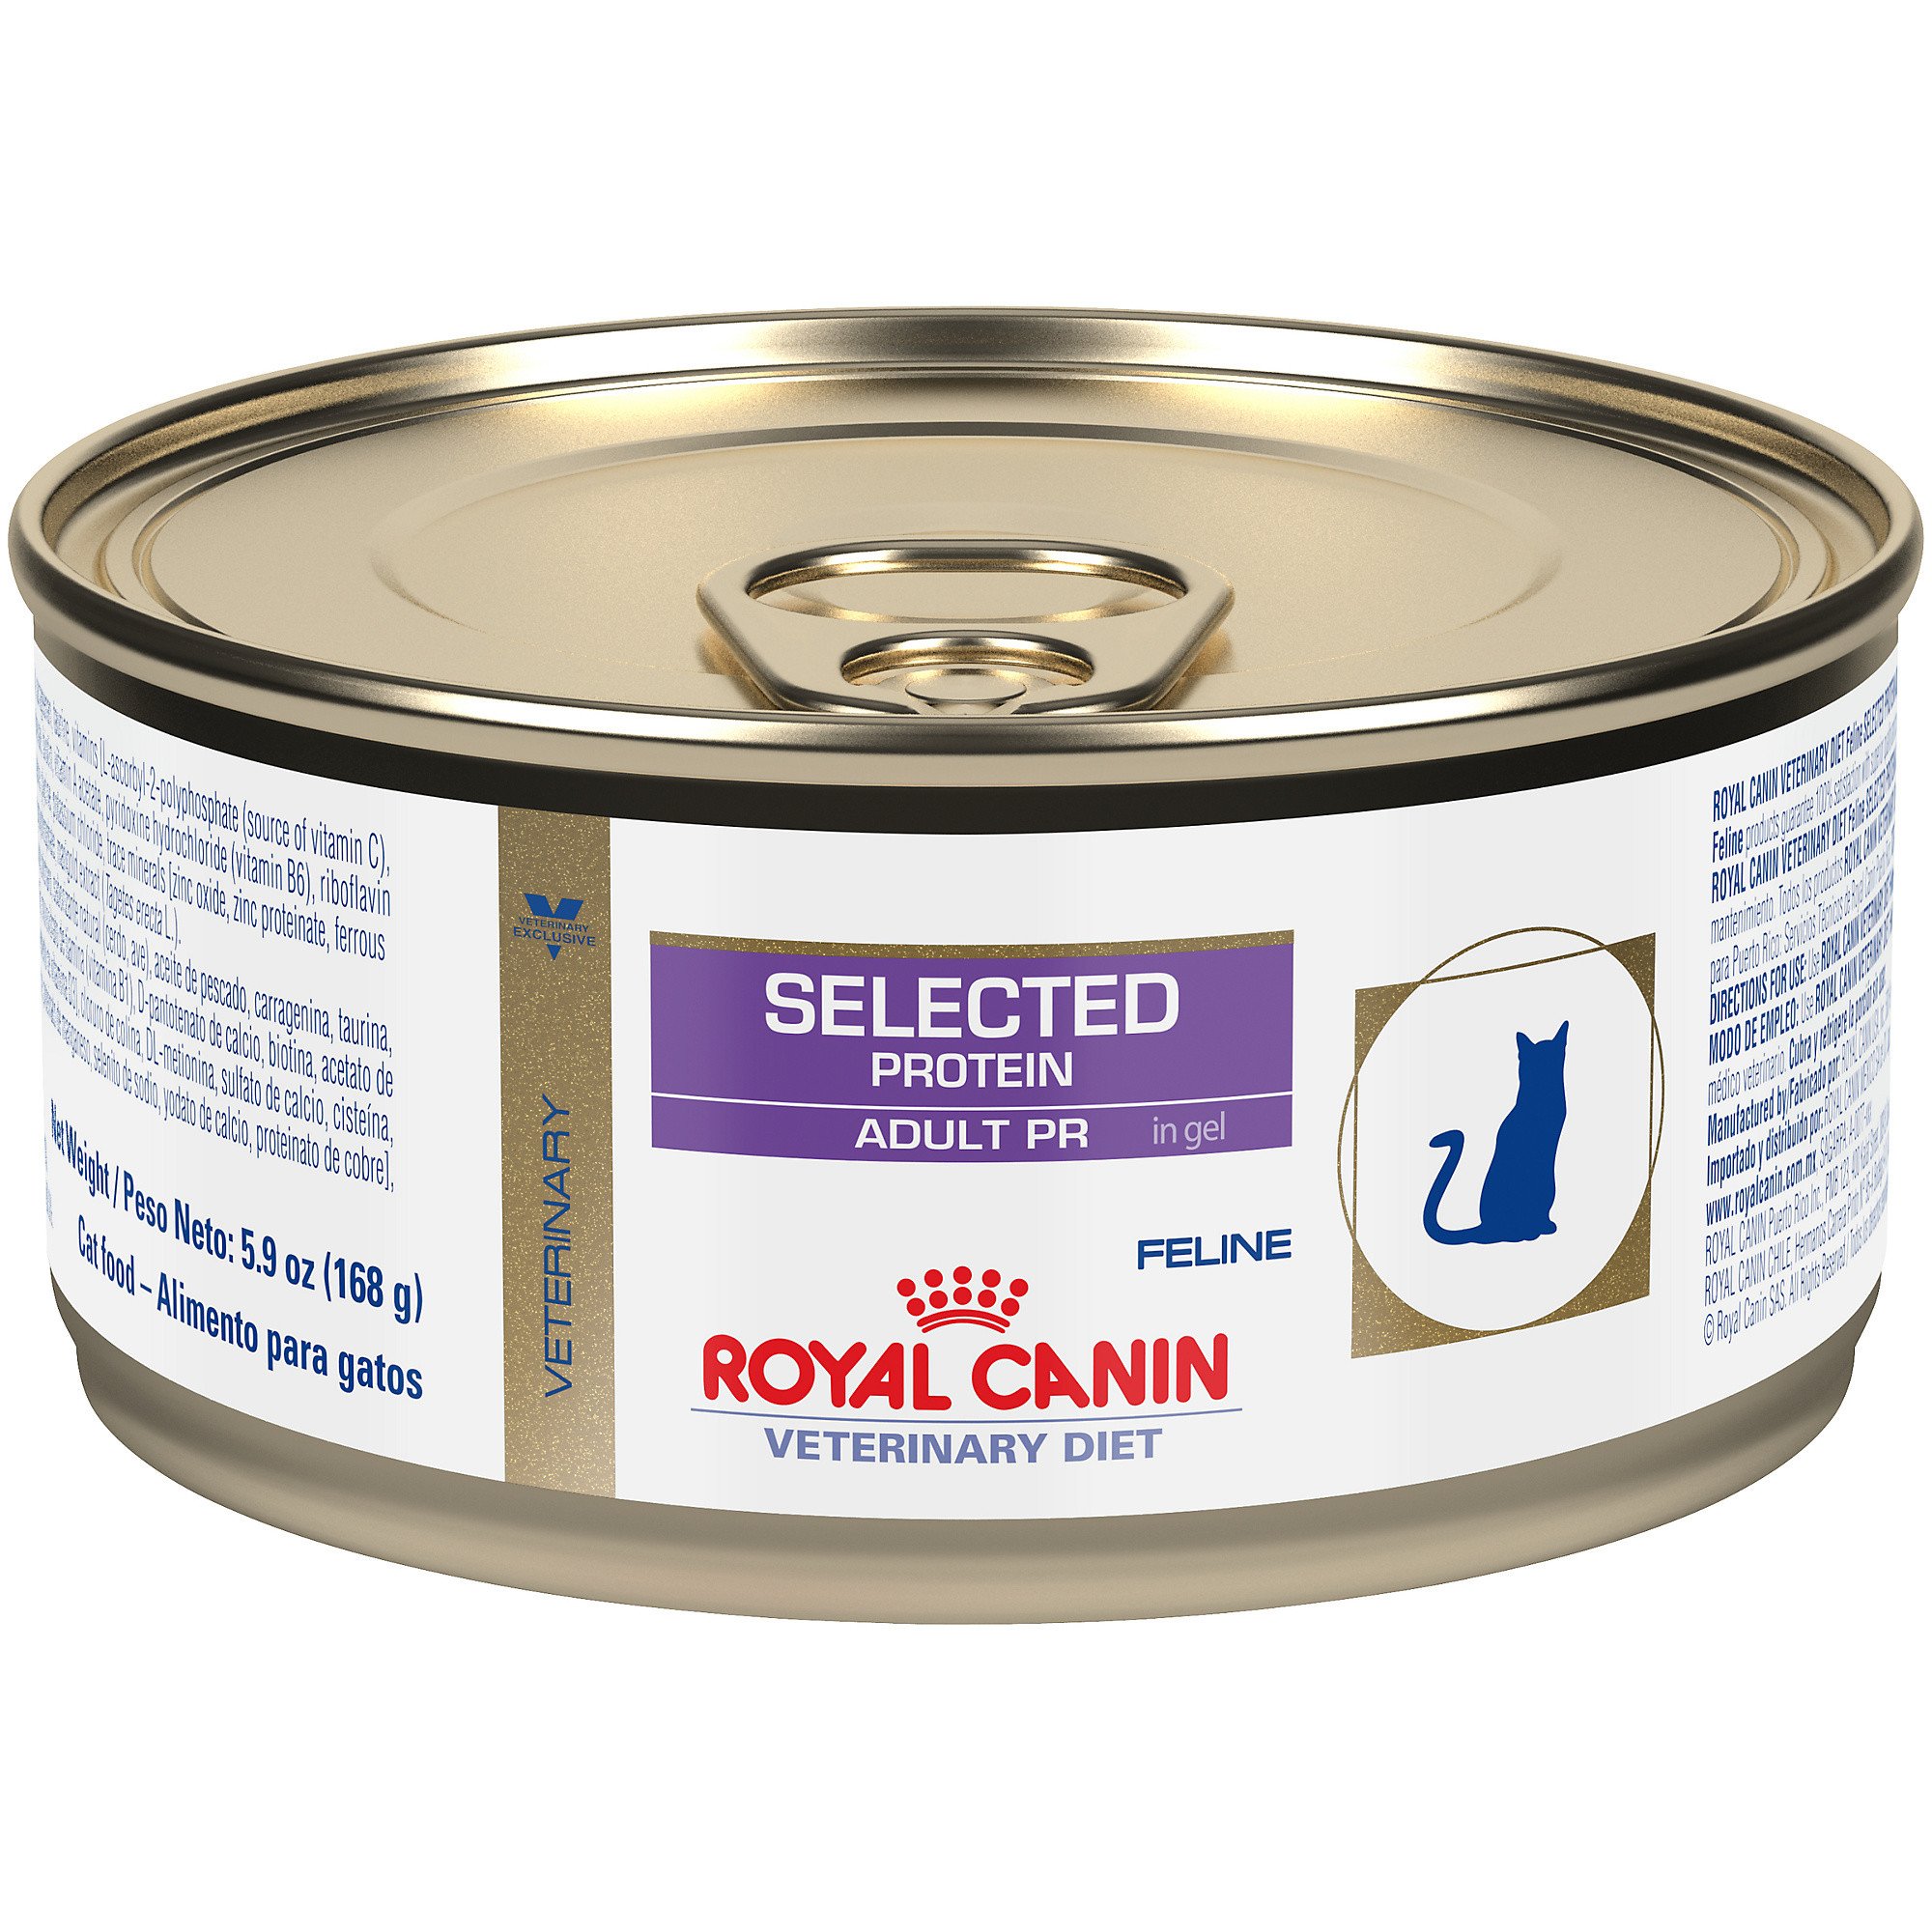 Royal Canin Gastrointestinal Cat Food Petco